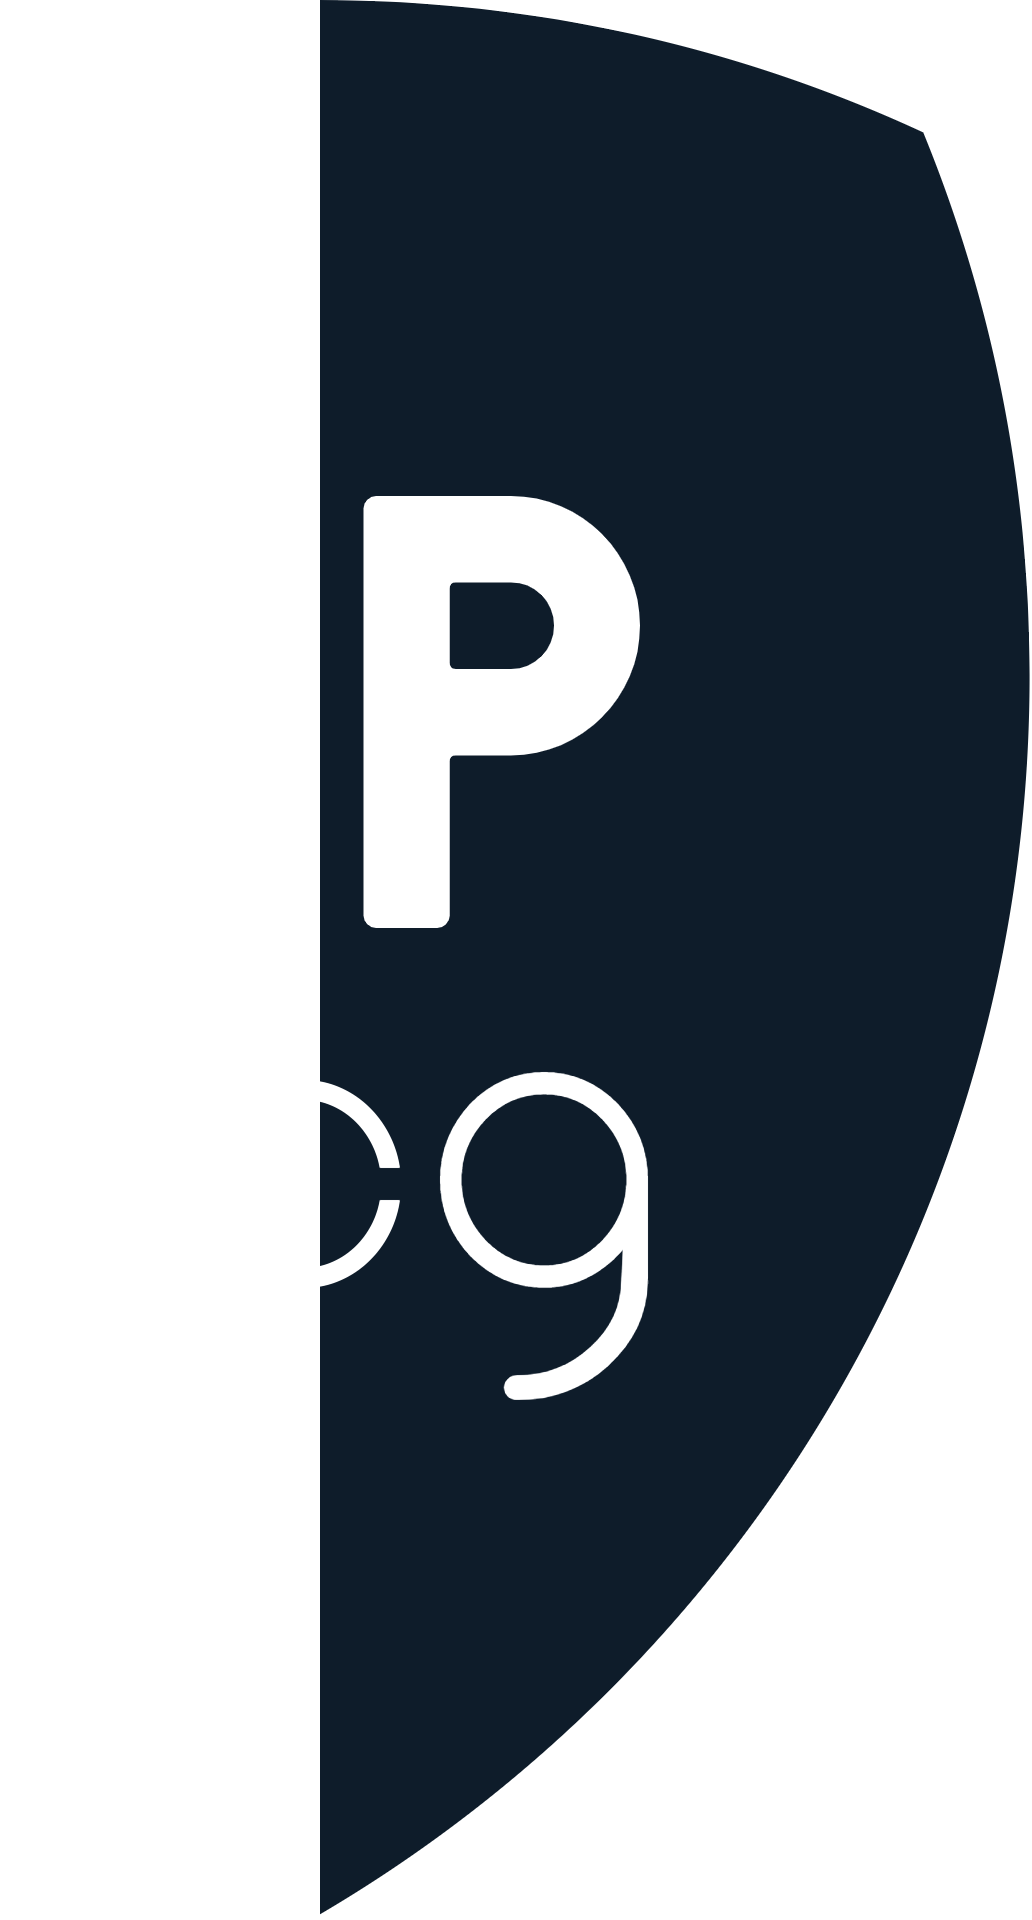 XP Log